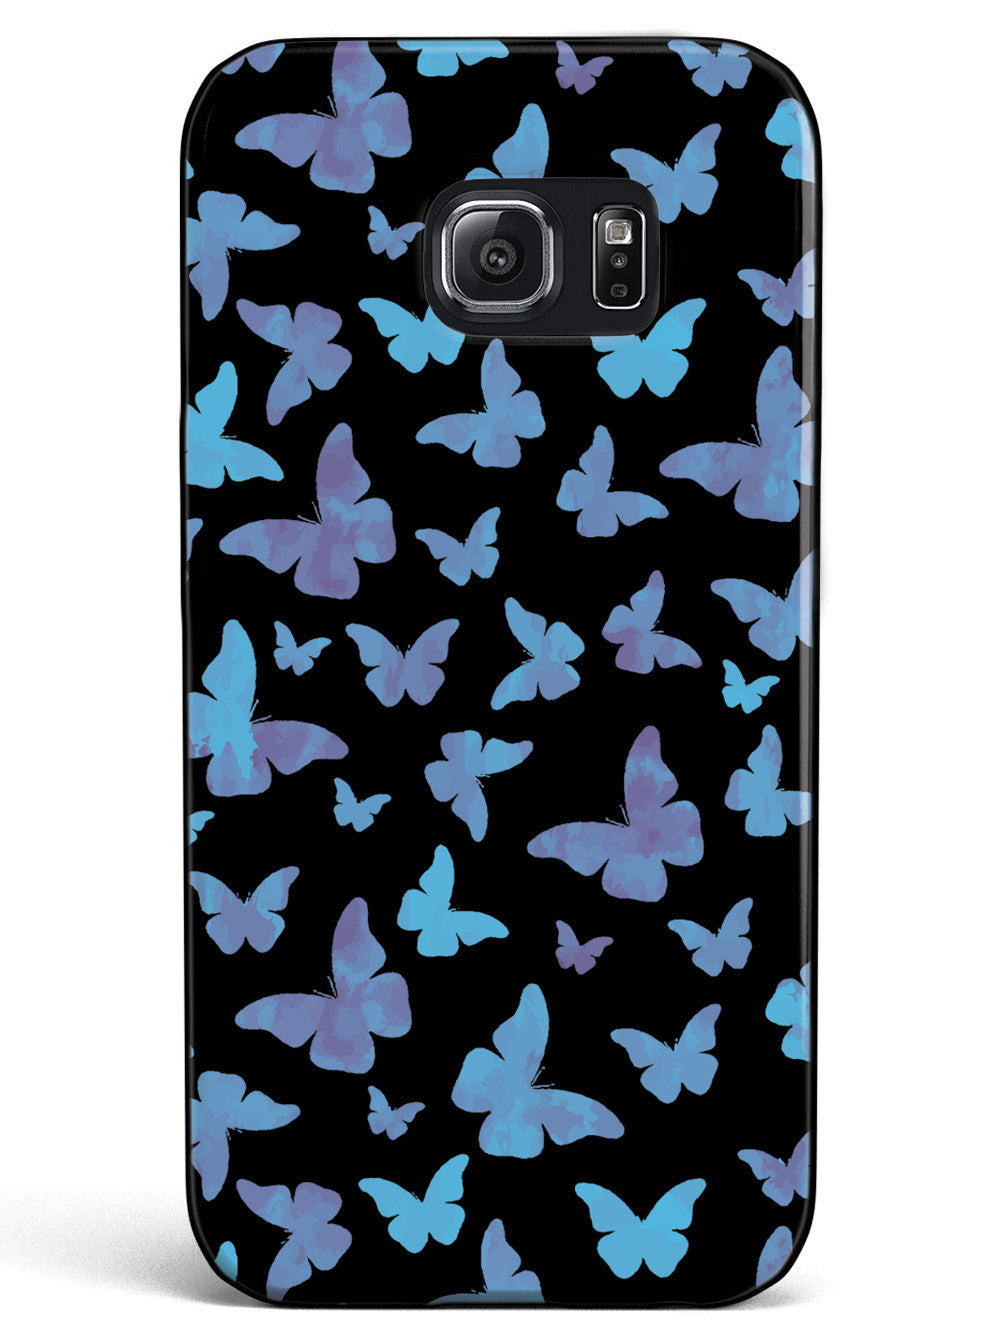 Blue Butterflies - Black Case